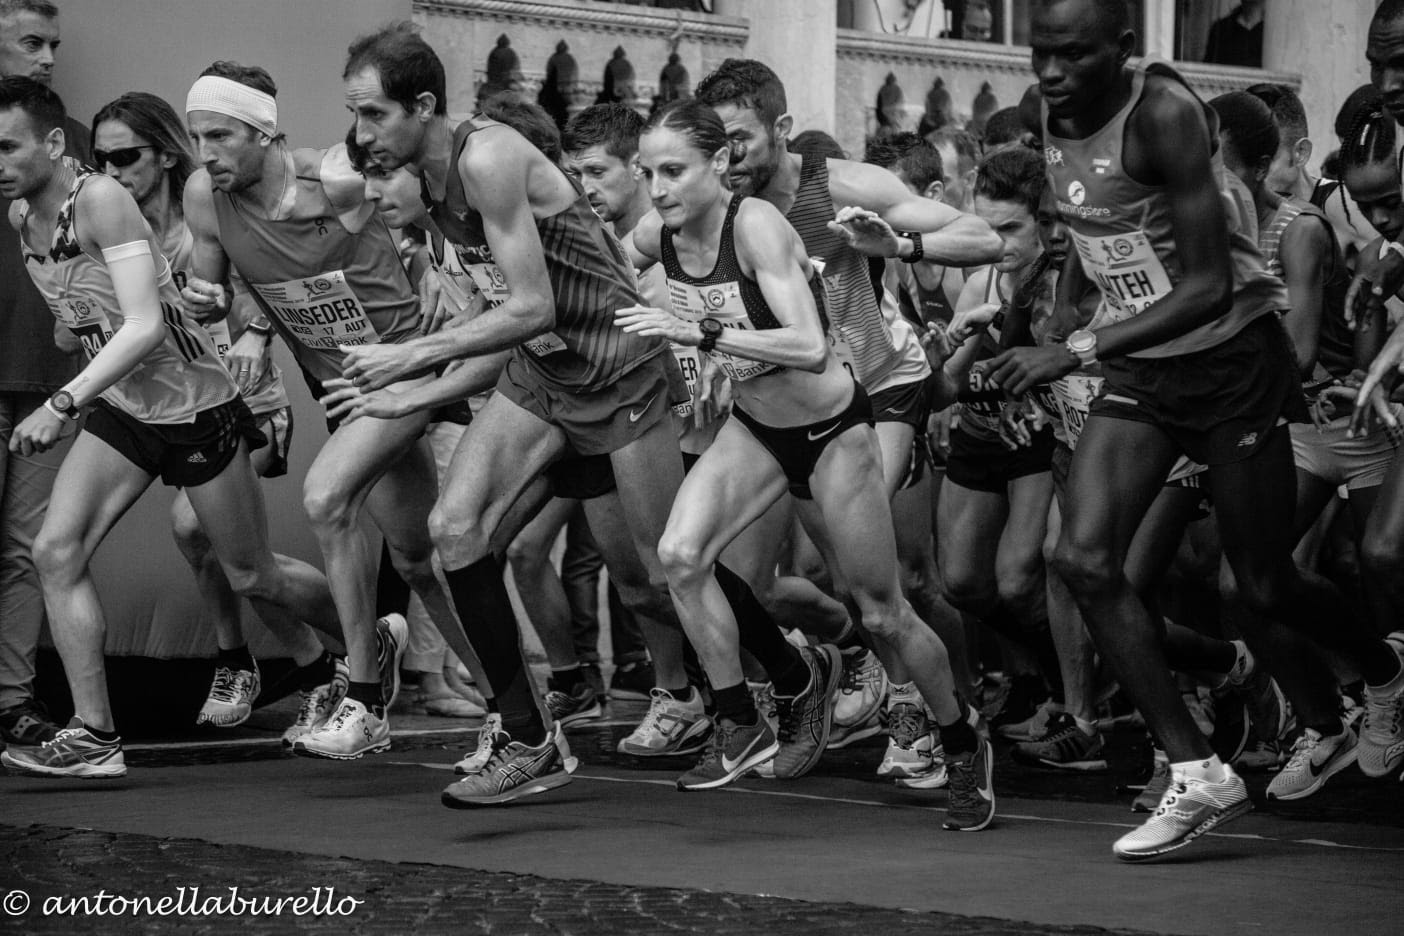 Maratonina Internazionale Città di Udine